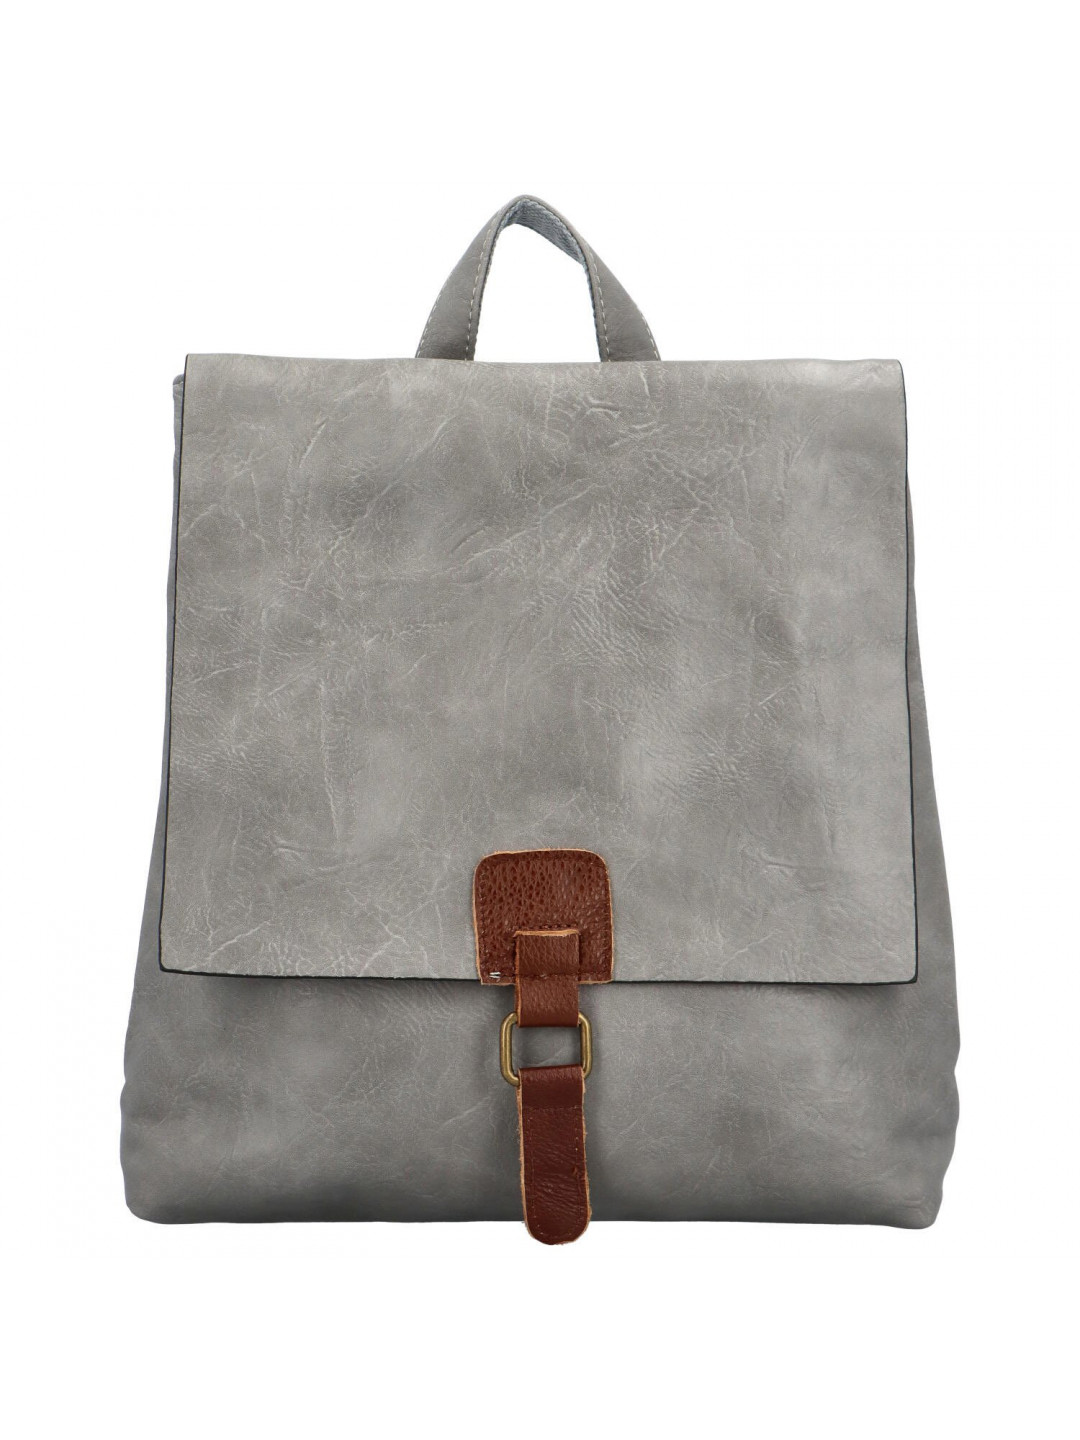 Dámský kabelko batoh šedý – Paolo bags Olefir